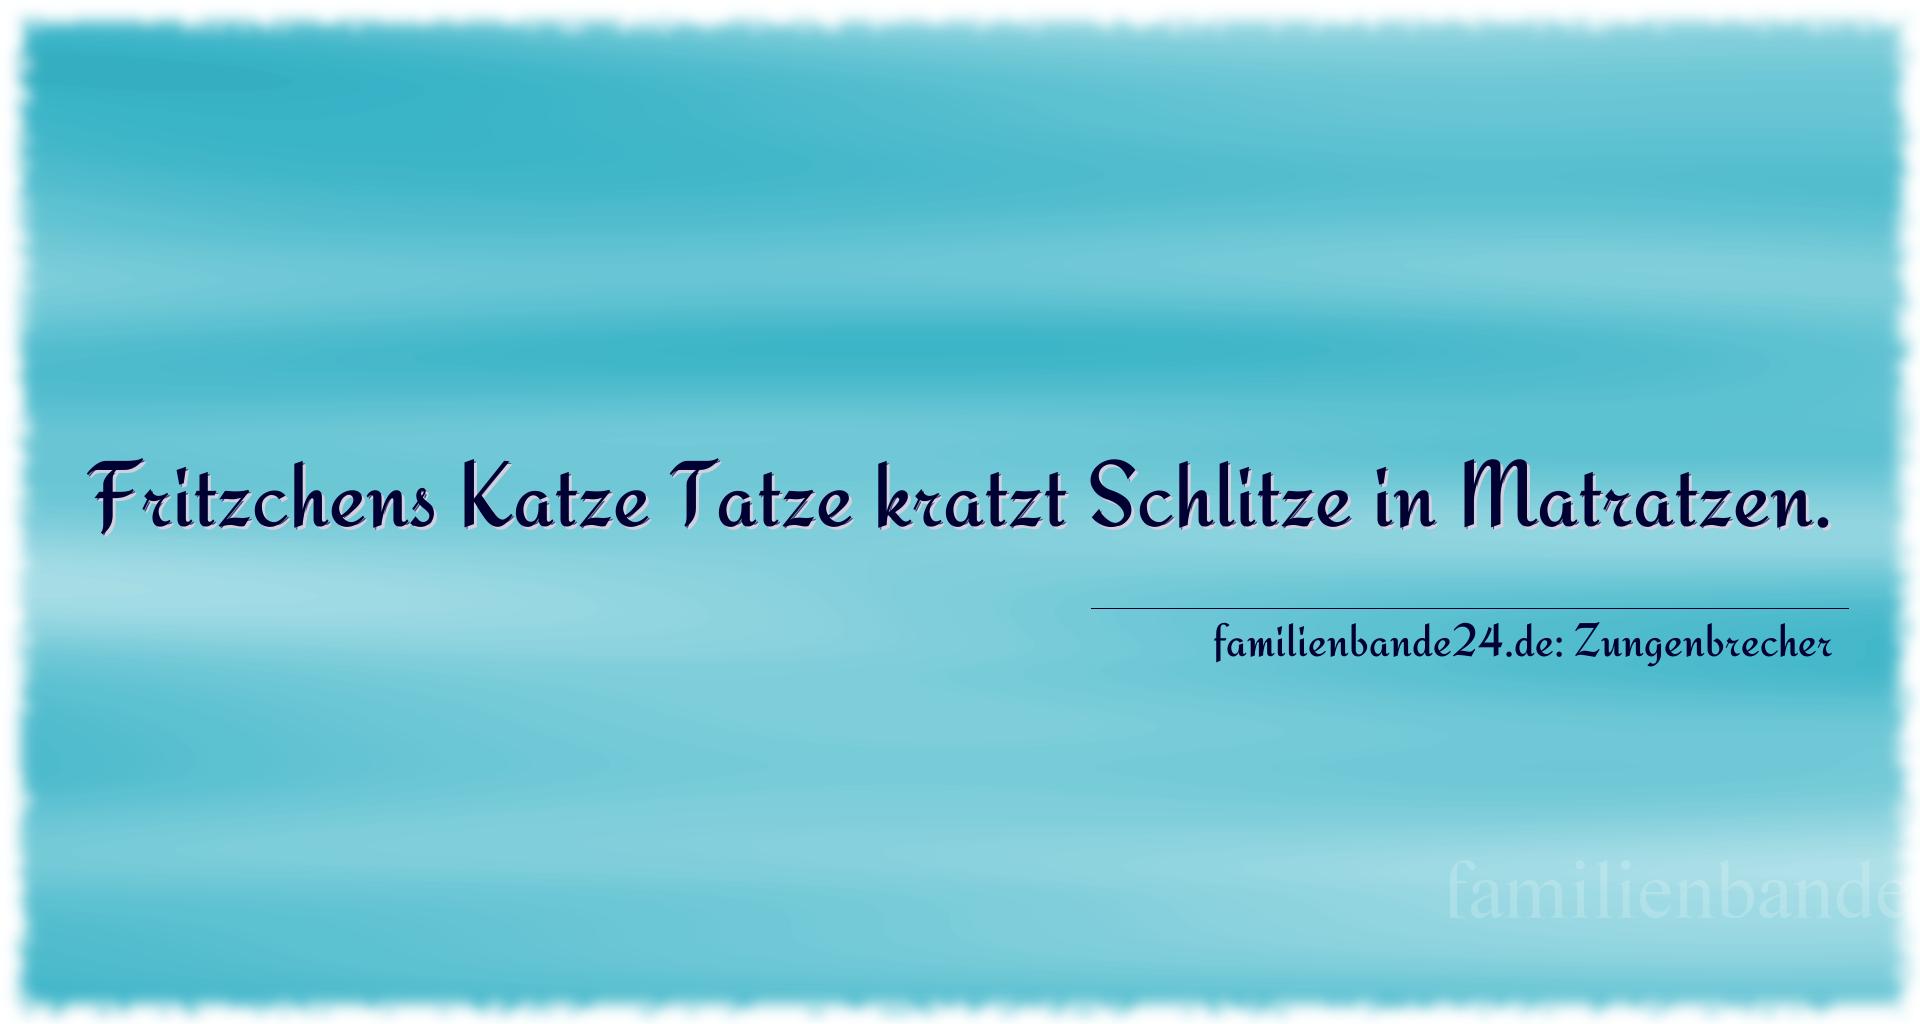 Zungenbrecher Nr. 718: Fritzchens Katze Tatze kratzt Schlitze in Matratzen.